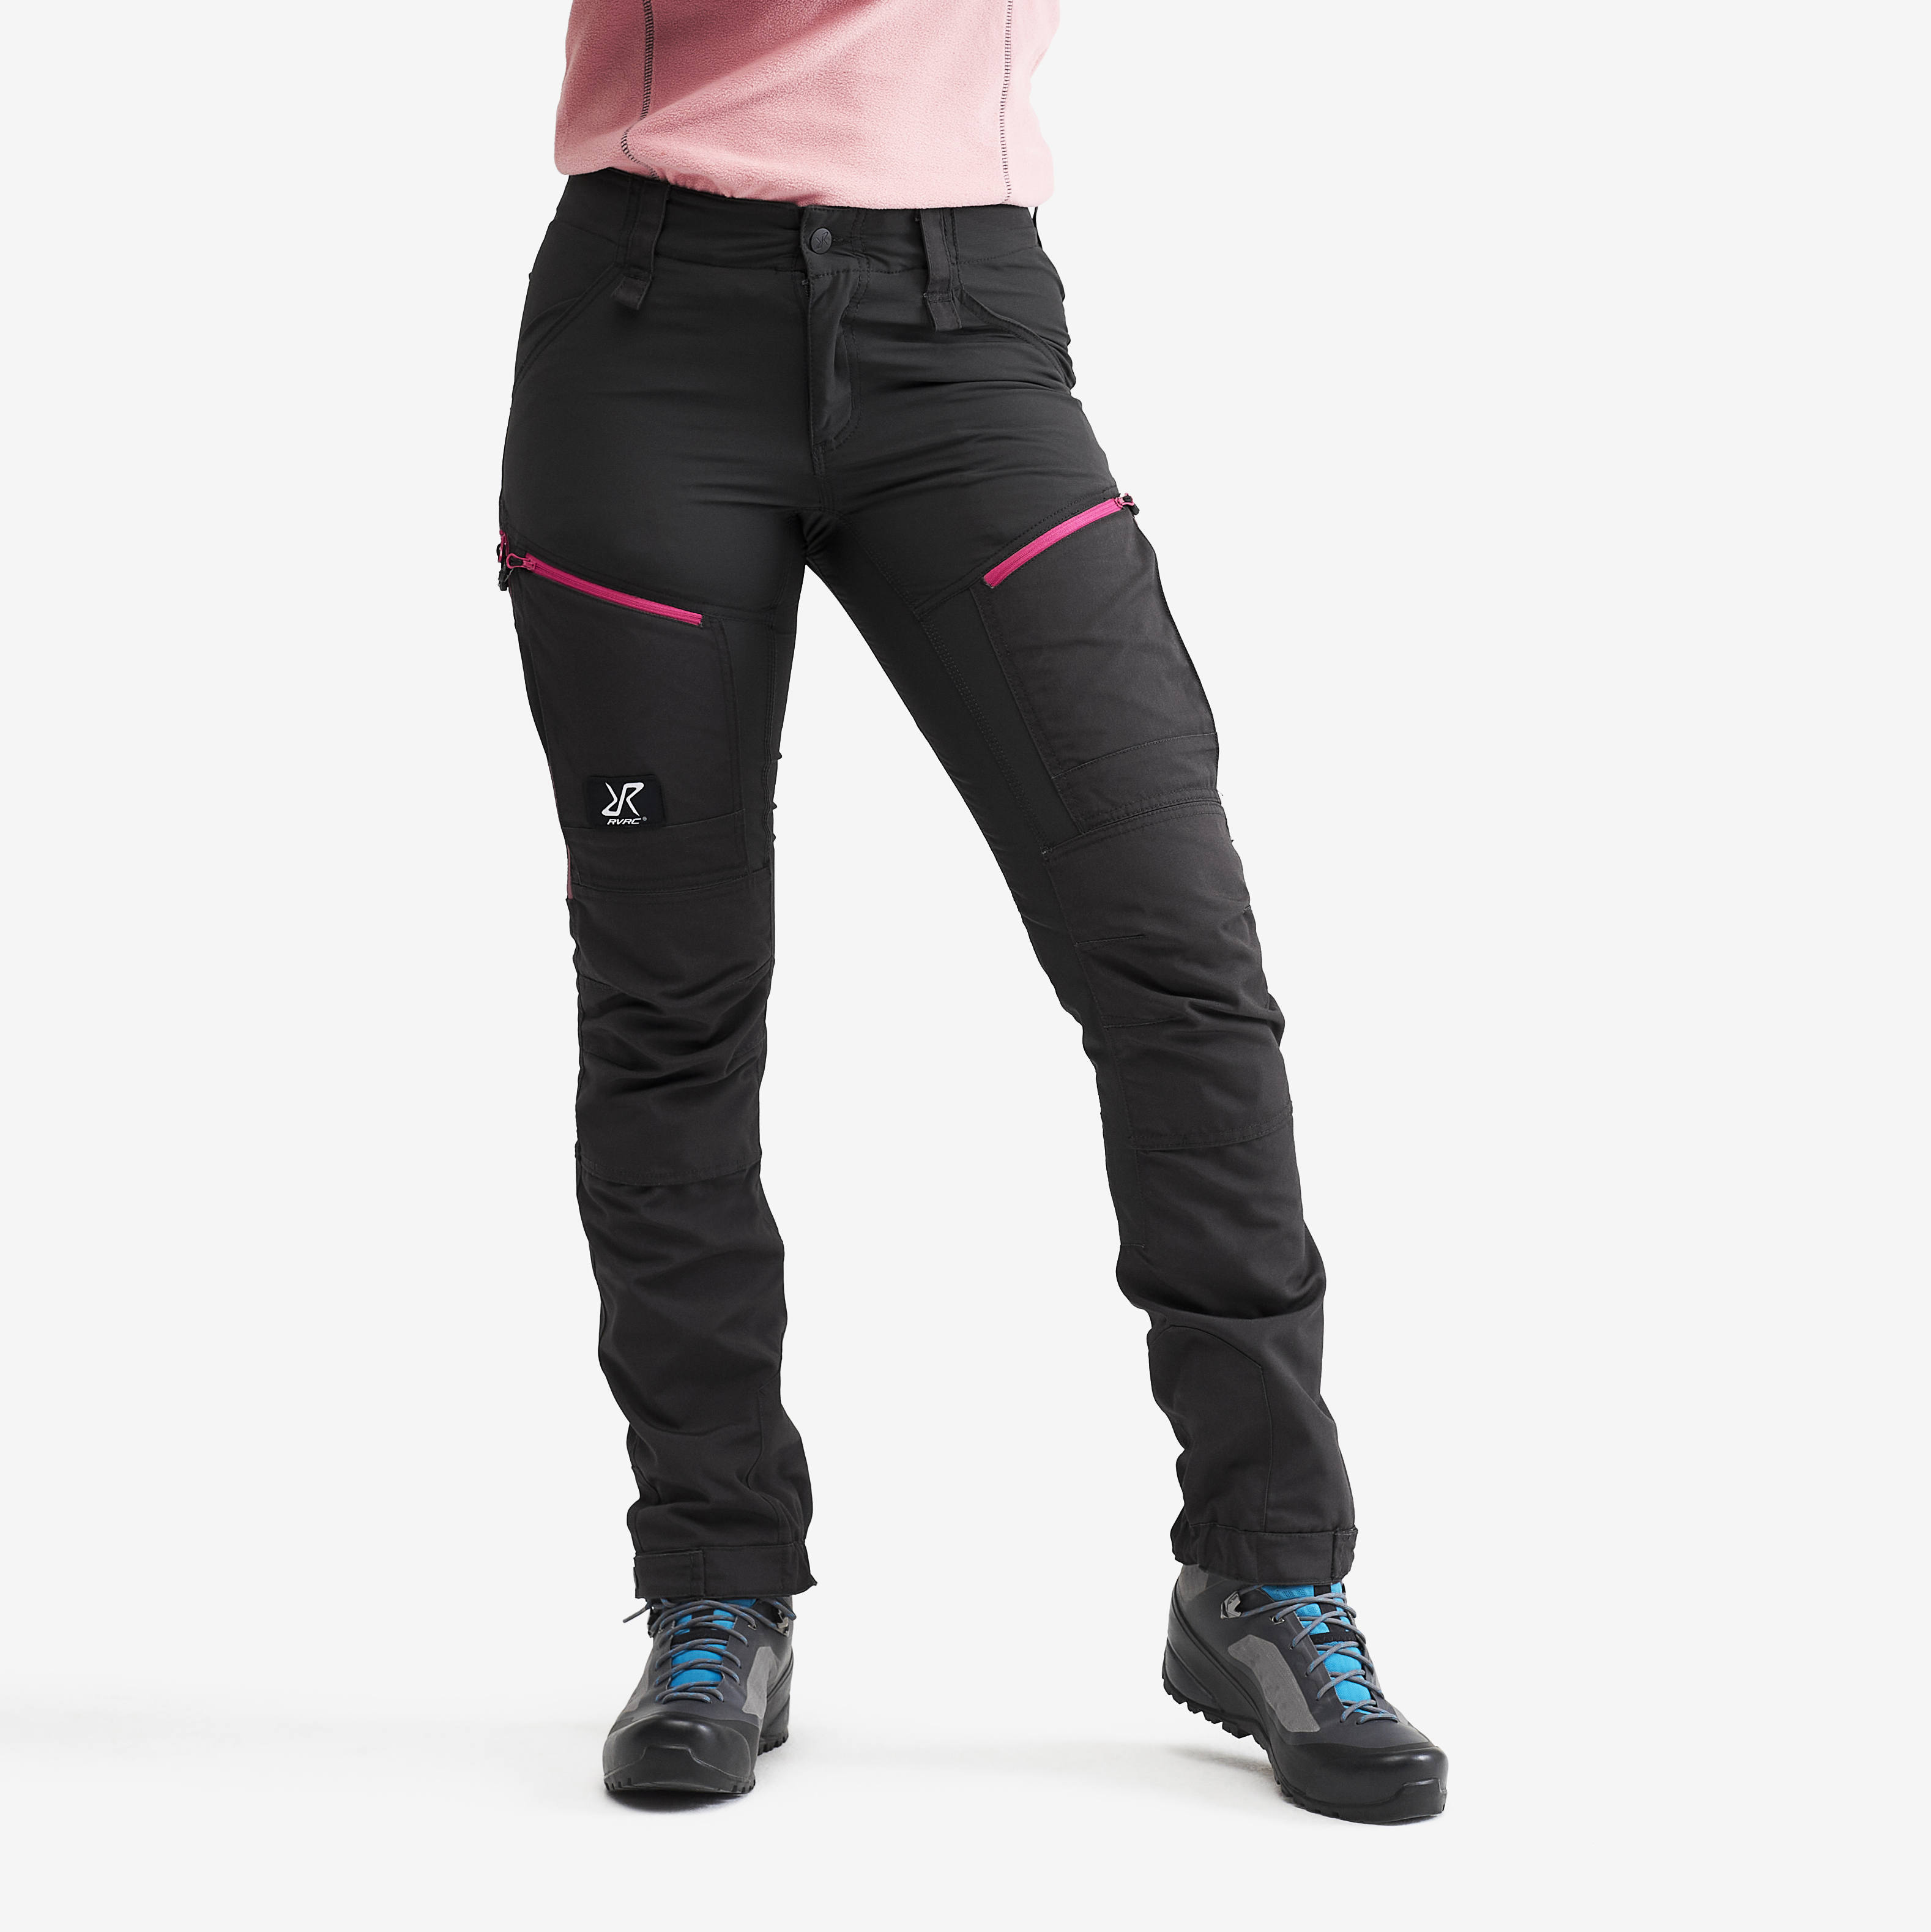 RVRC GP Pro Pants Grey/Pink Mujeres